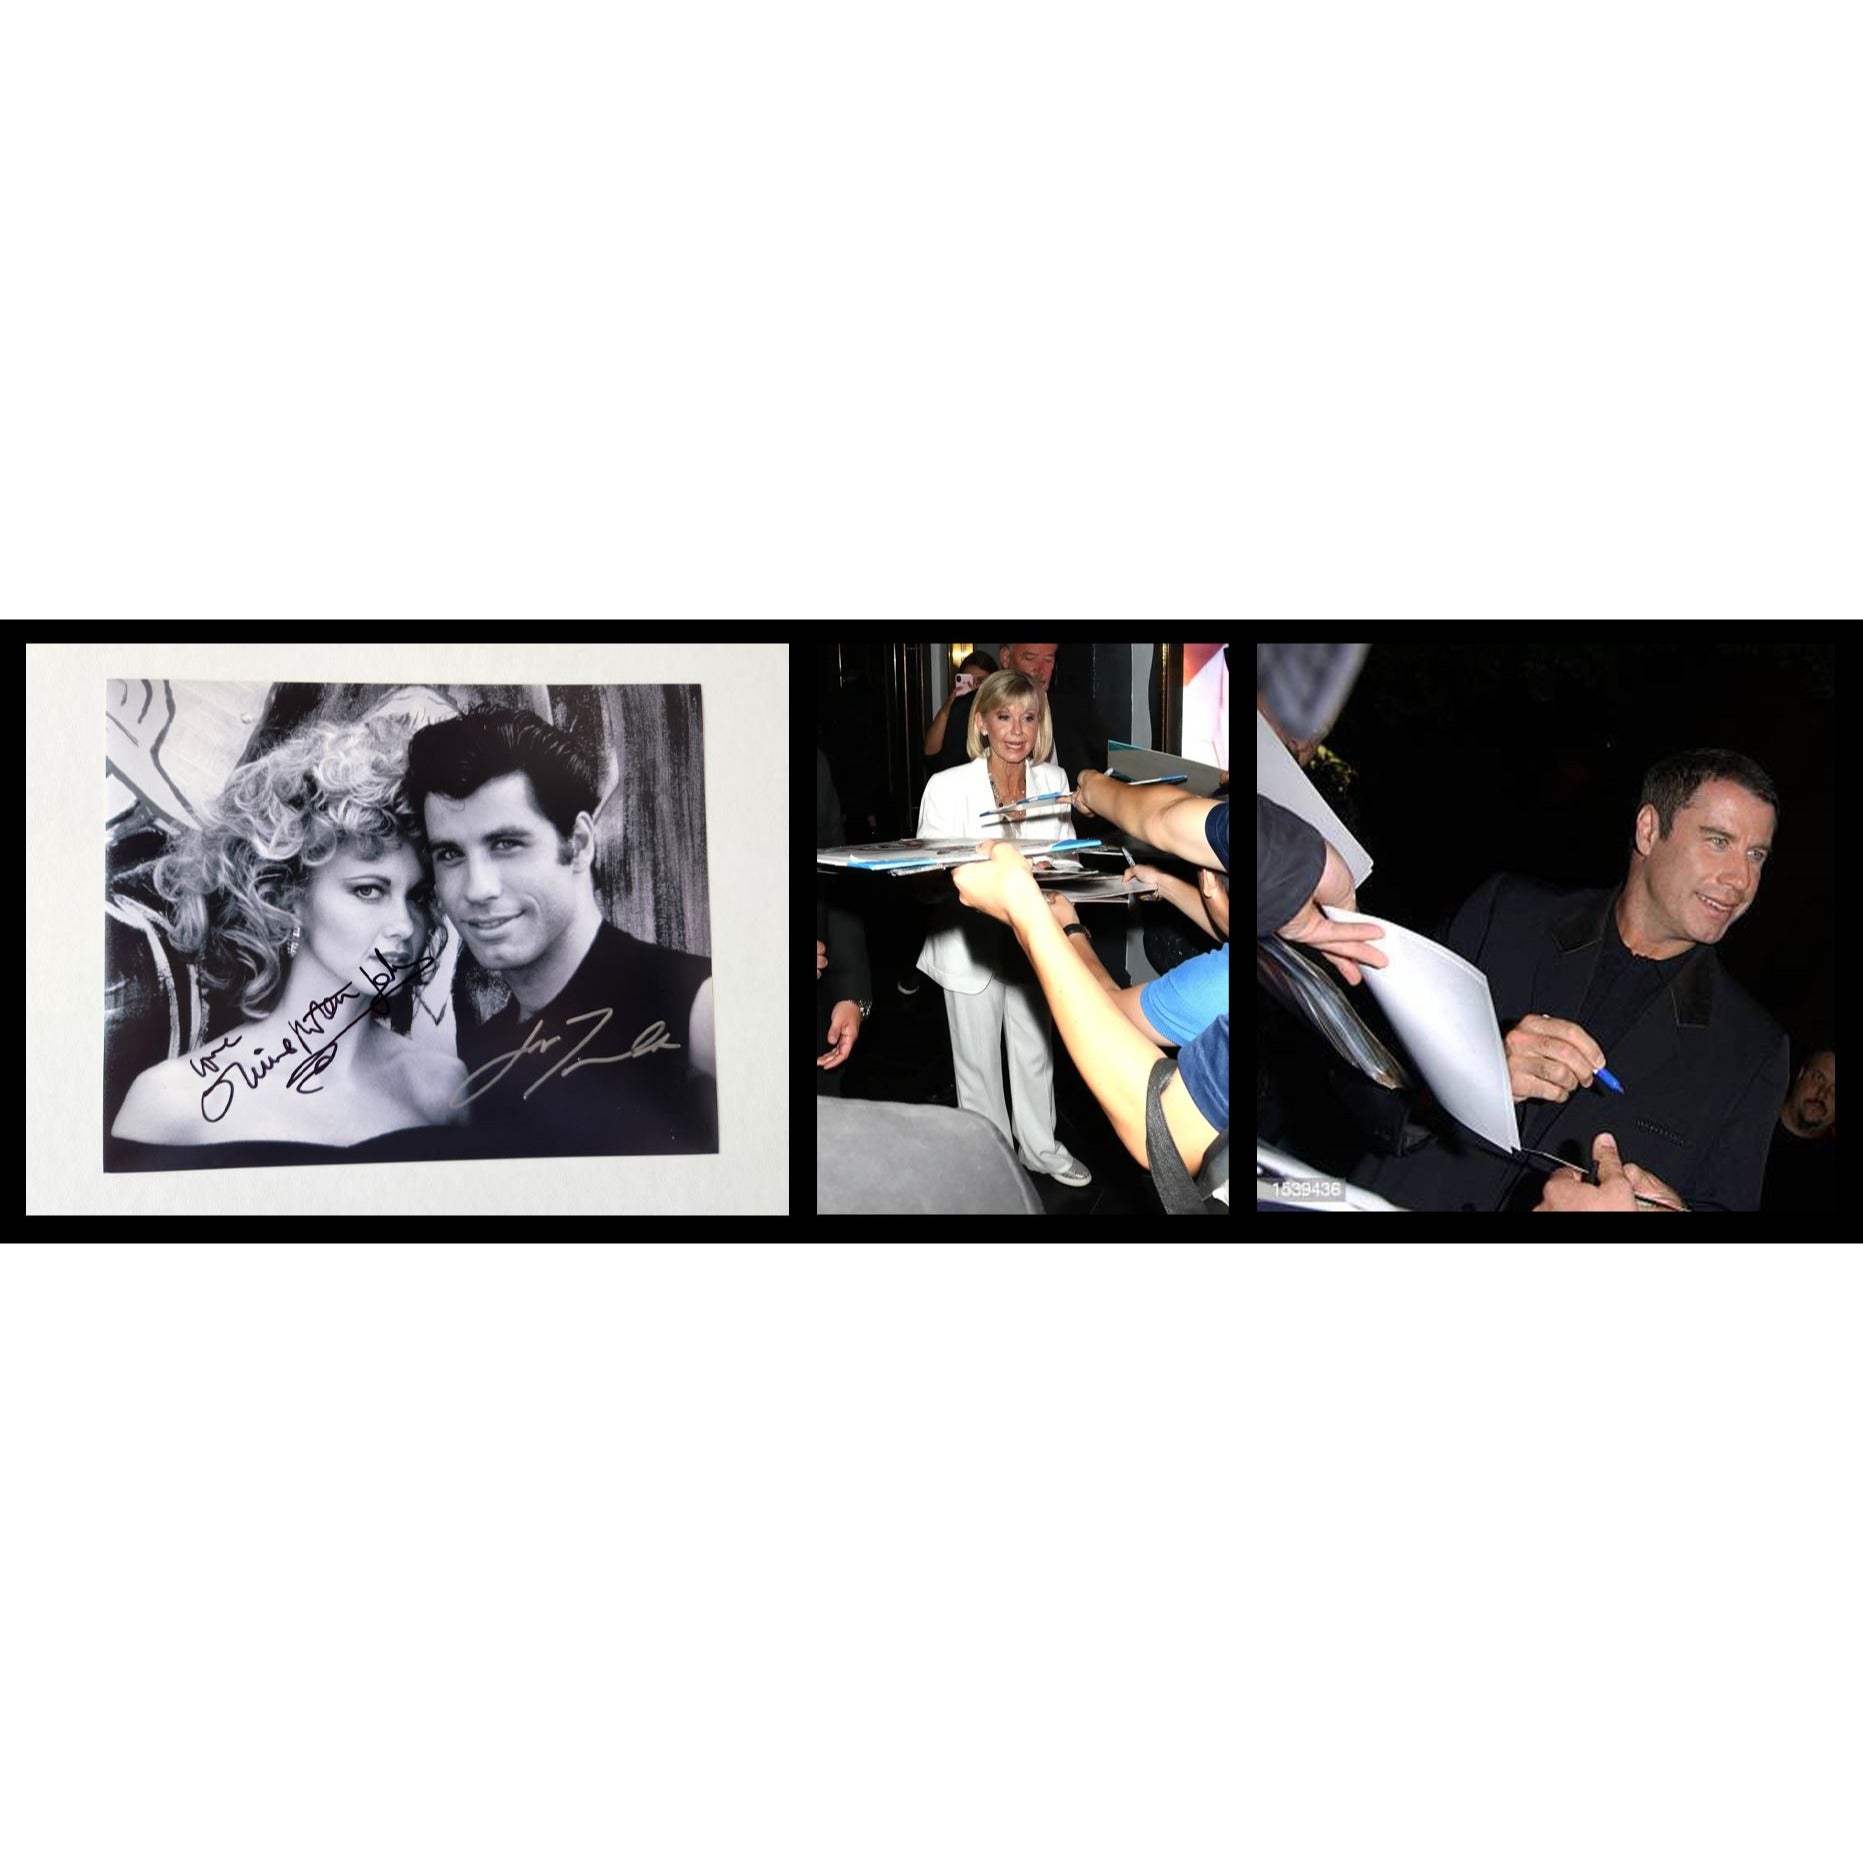 Greece Olivia Newton-John and John Travolta 8x10 photo signed with proof